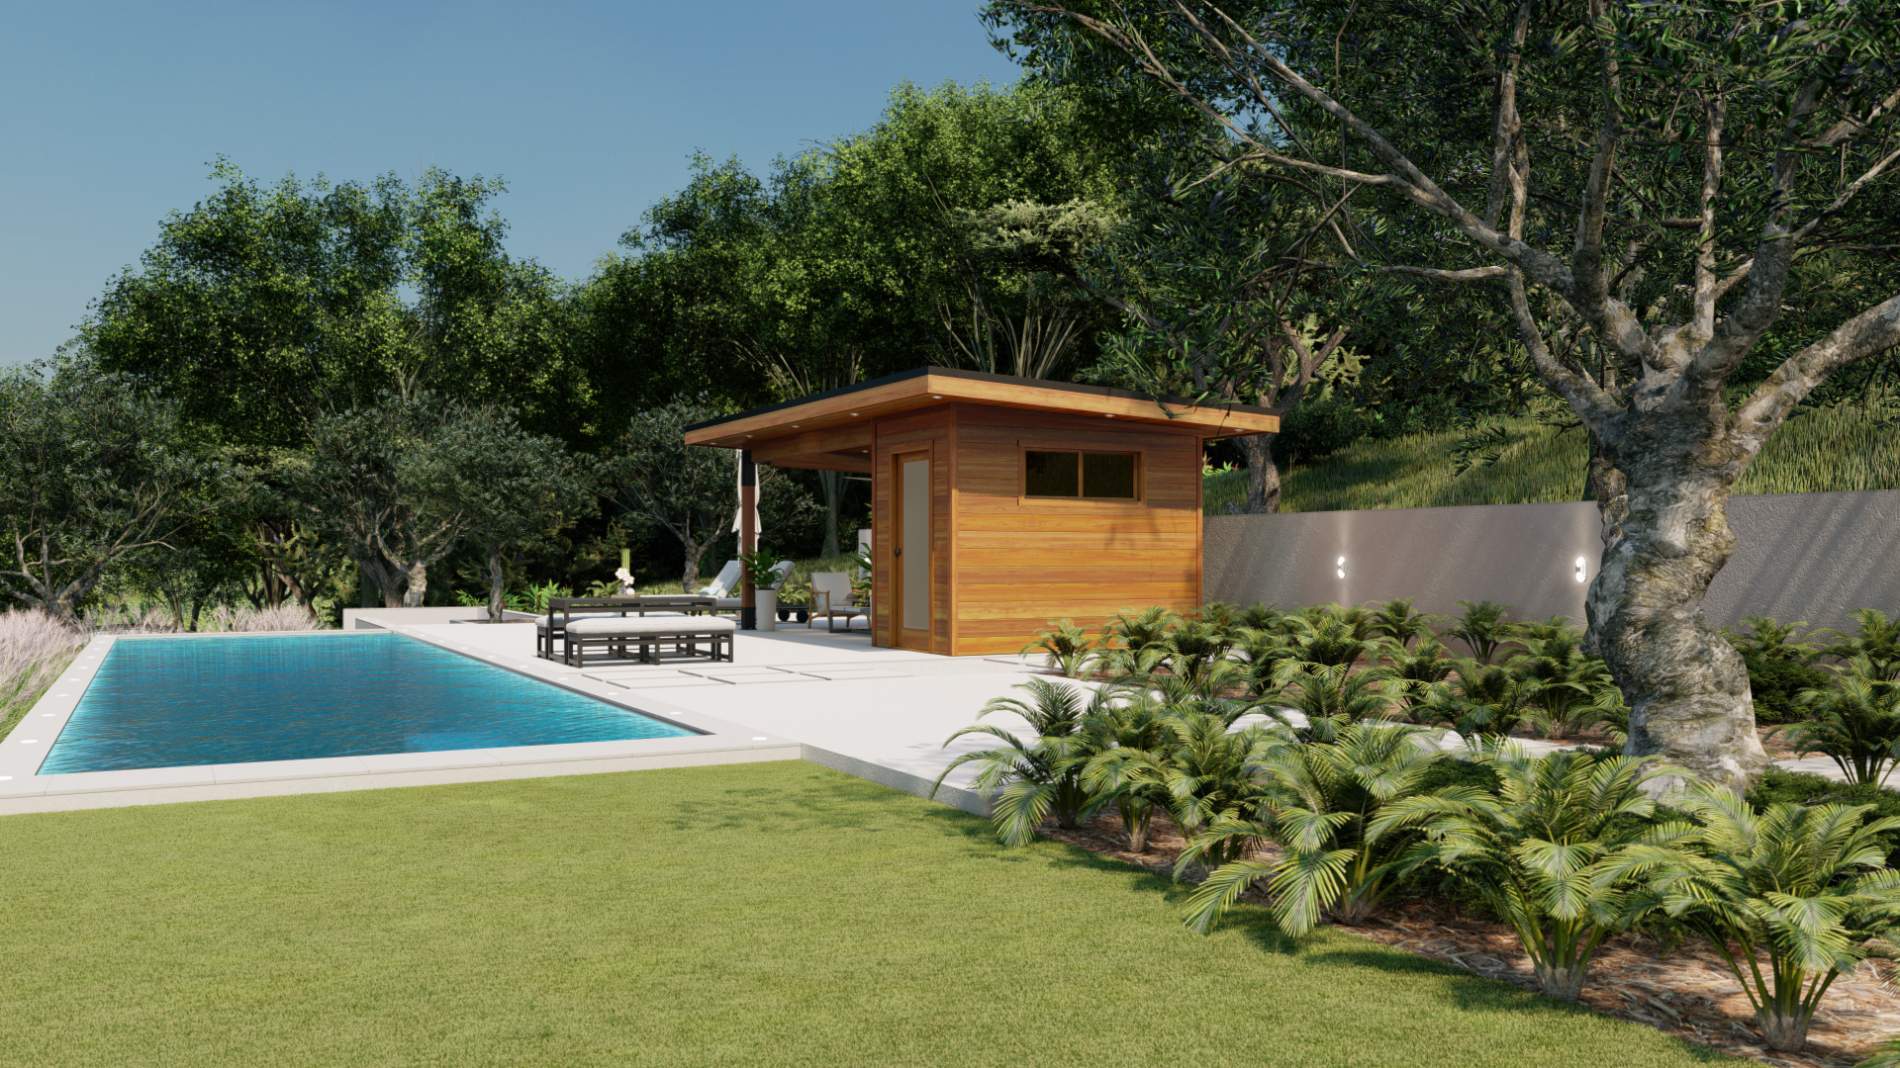 Right side view of 10’ x 20’ Sanara pool cabana – Summerwood Products